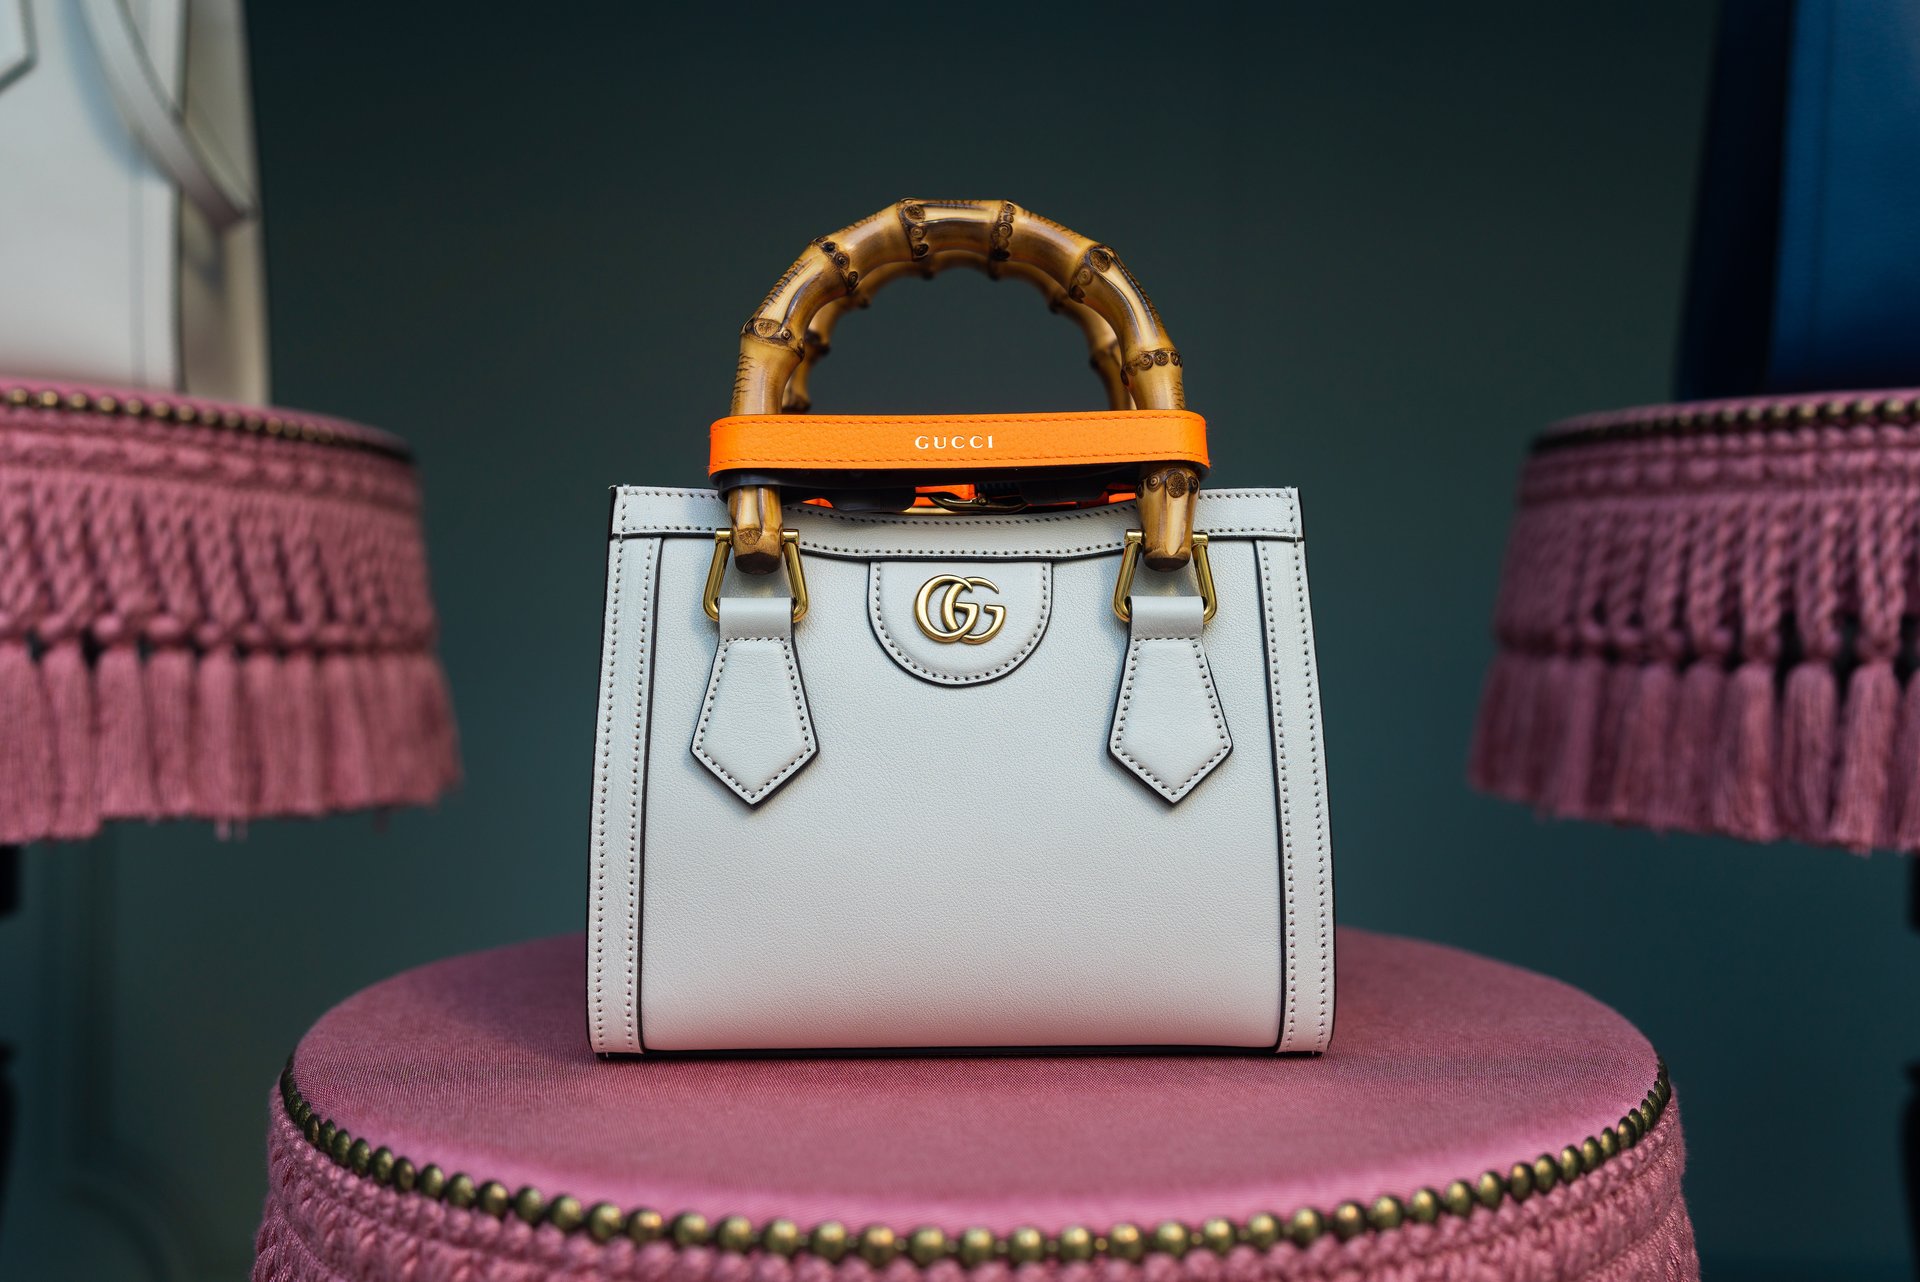 Cream Gucci handbag sat on a pink stool.